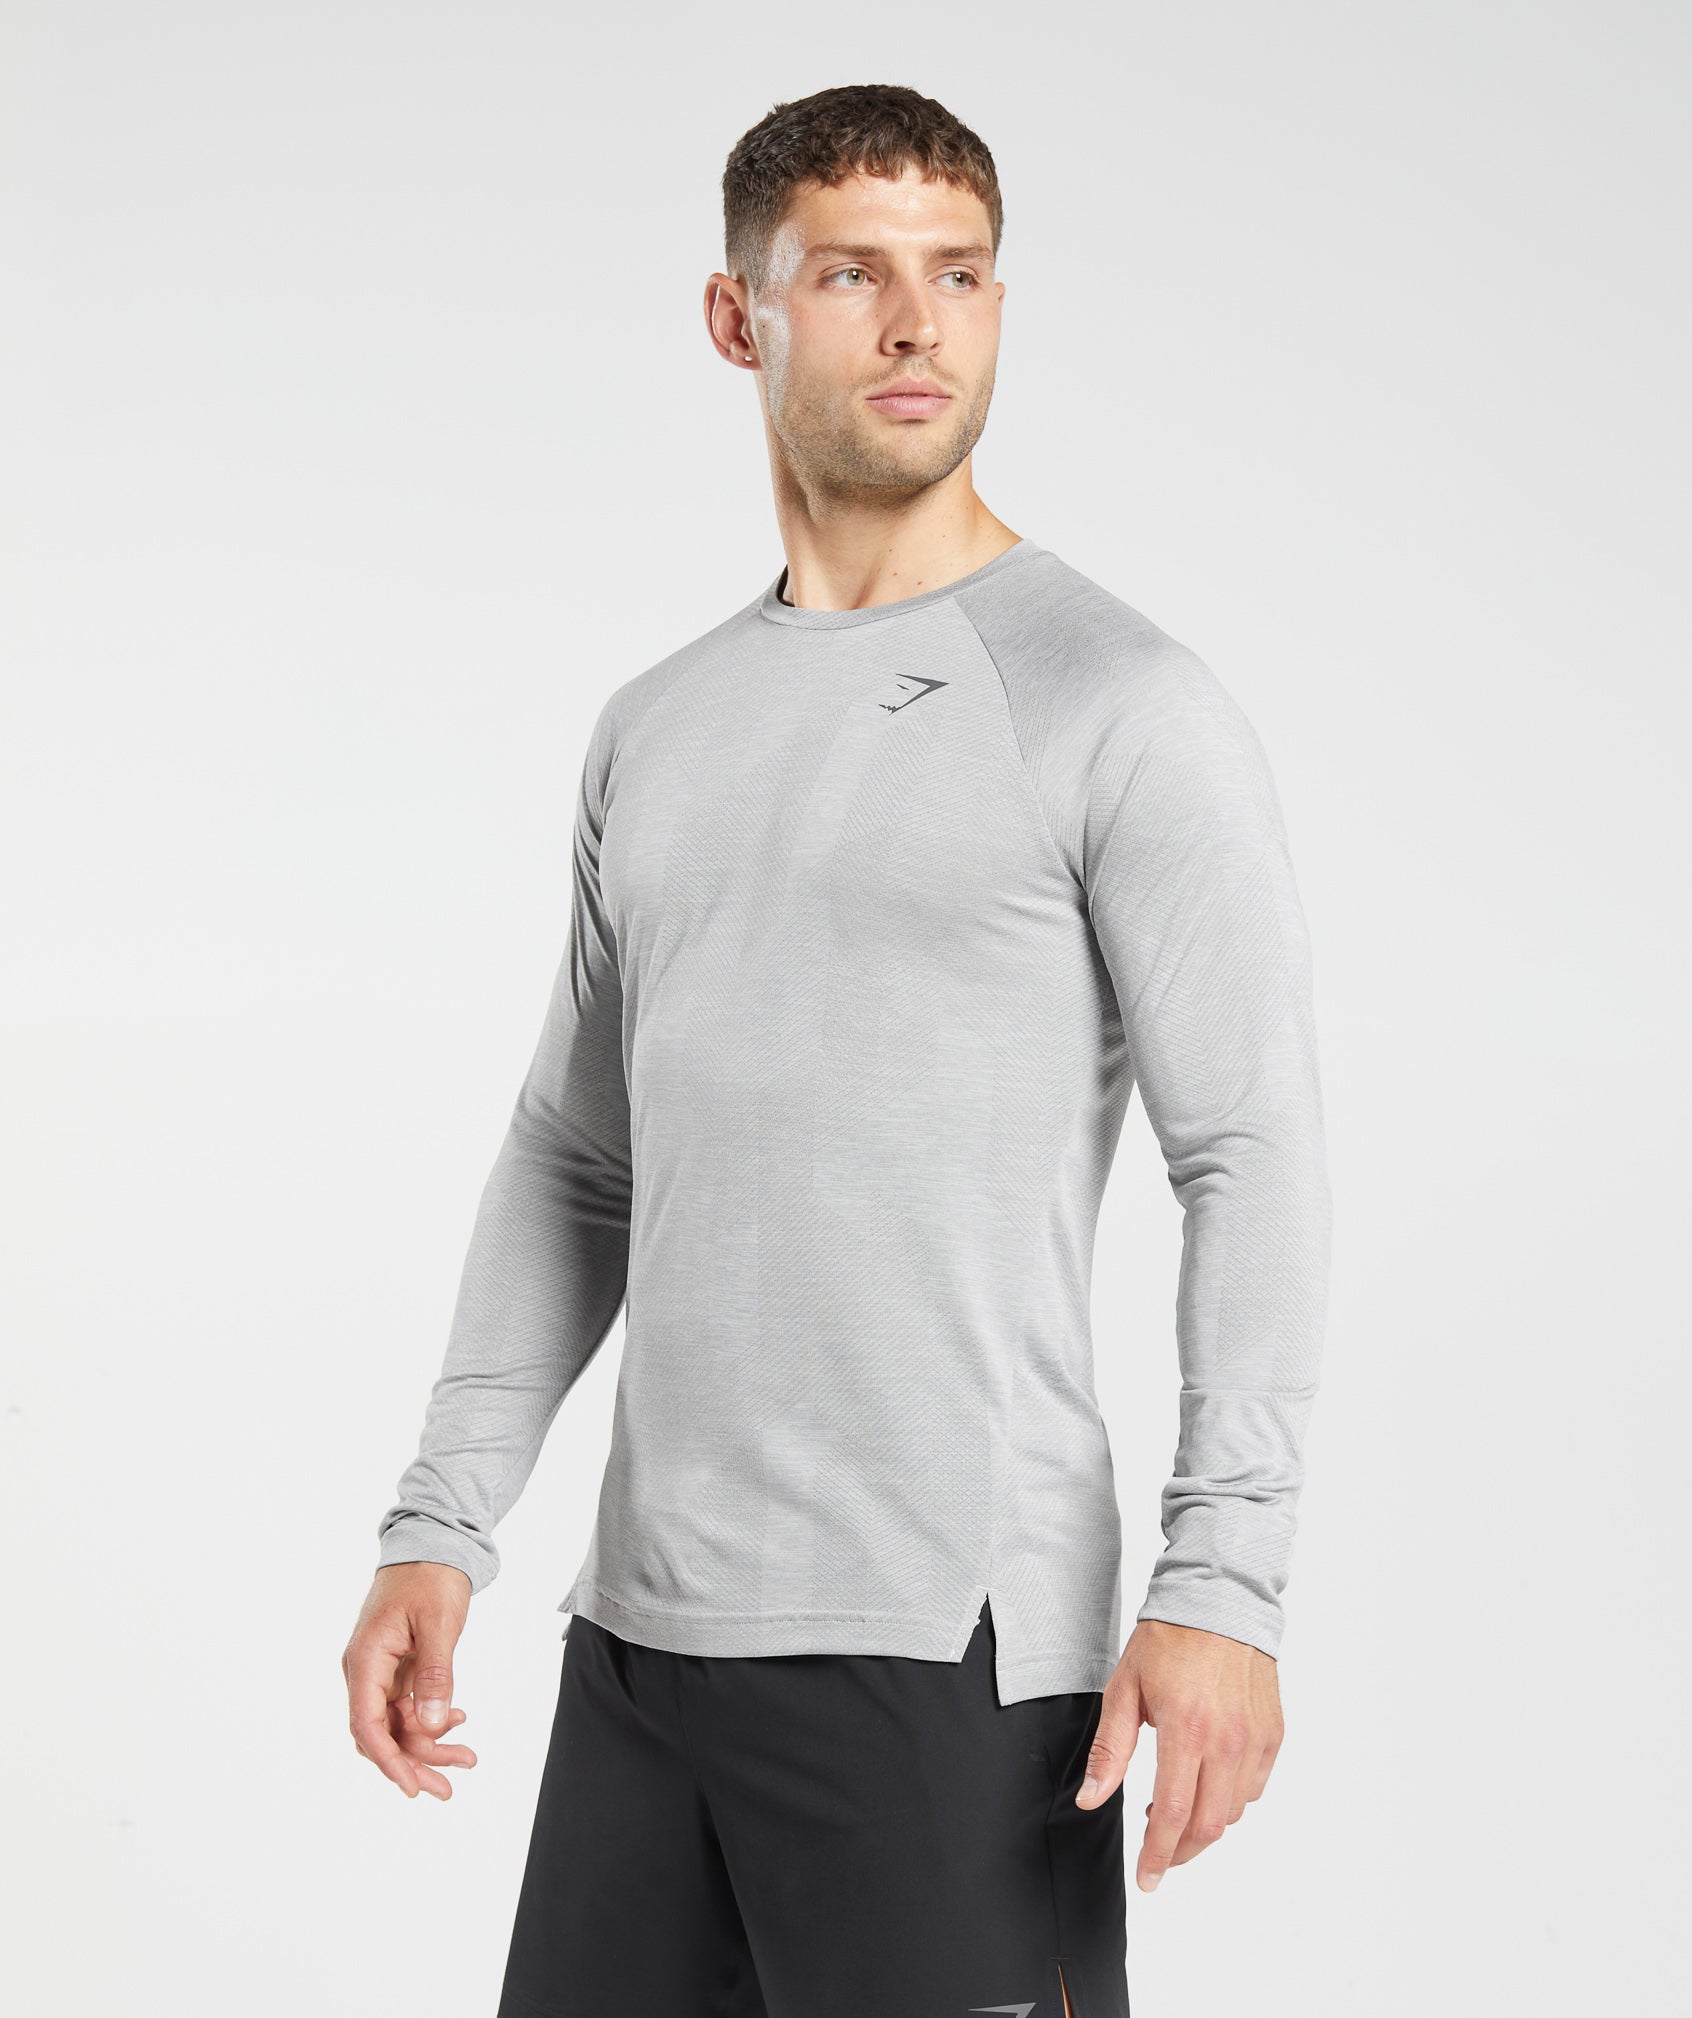 Apex Long Sleeve T-Shirt in Light Grey/Smokey Grey - view 3